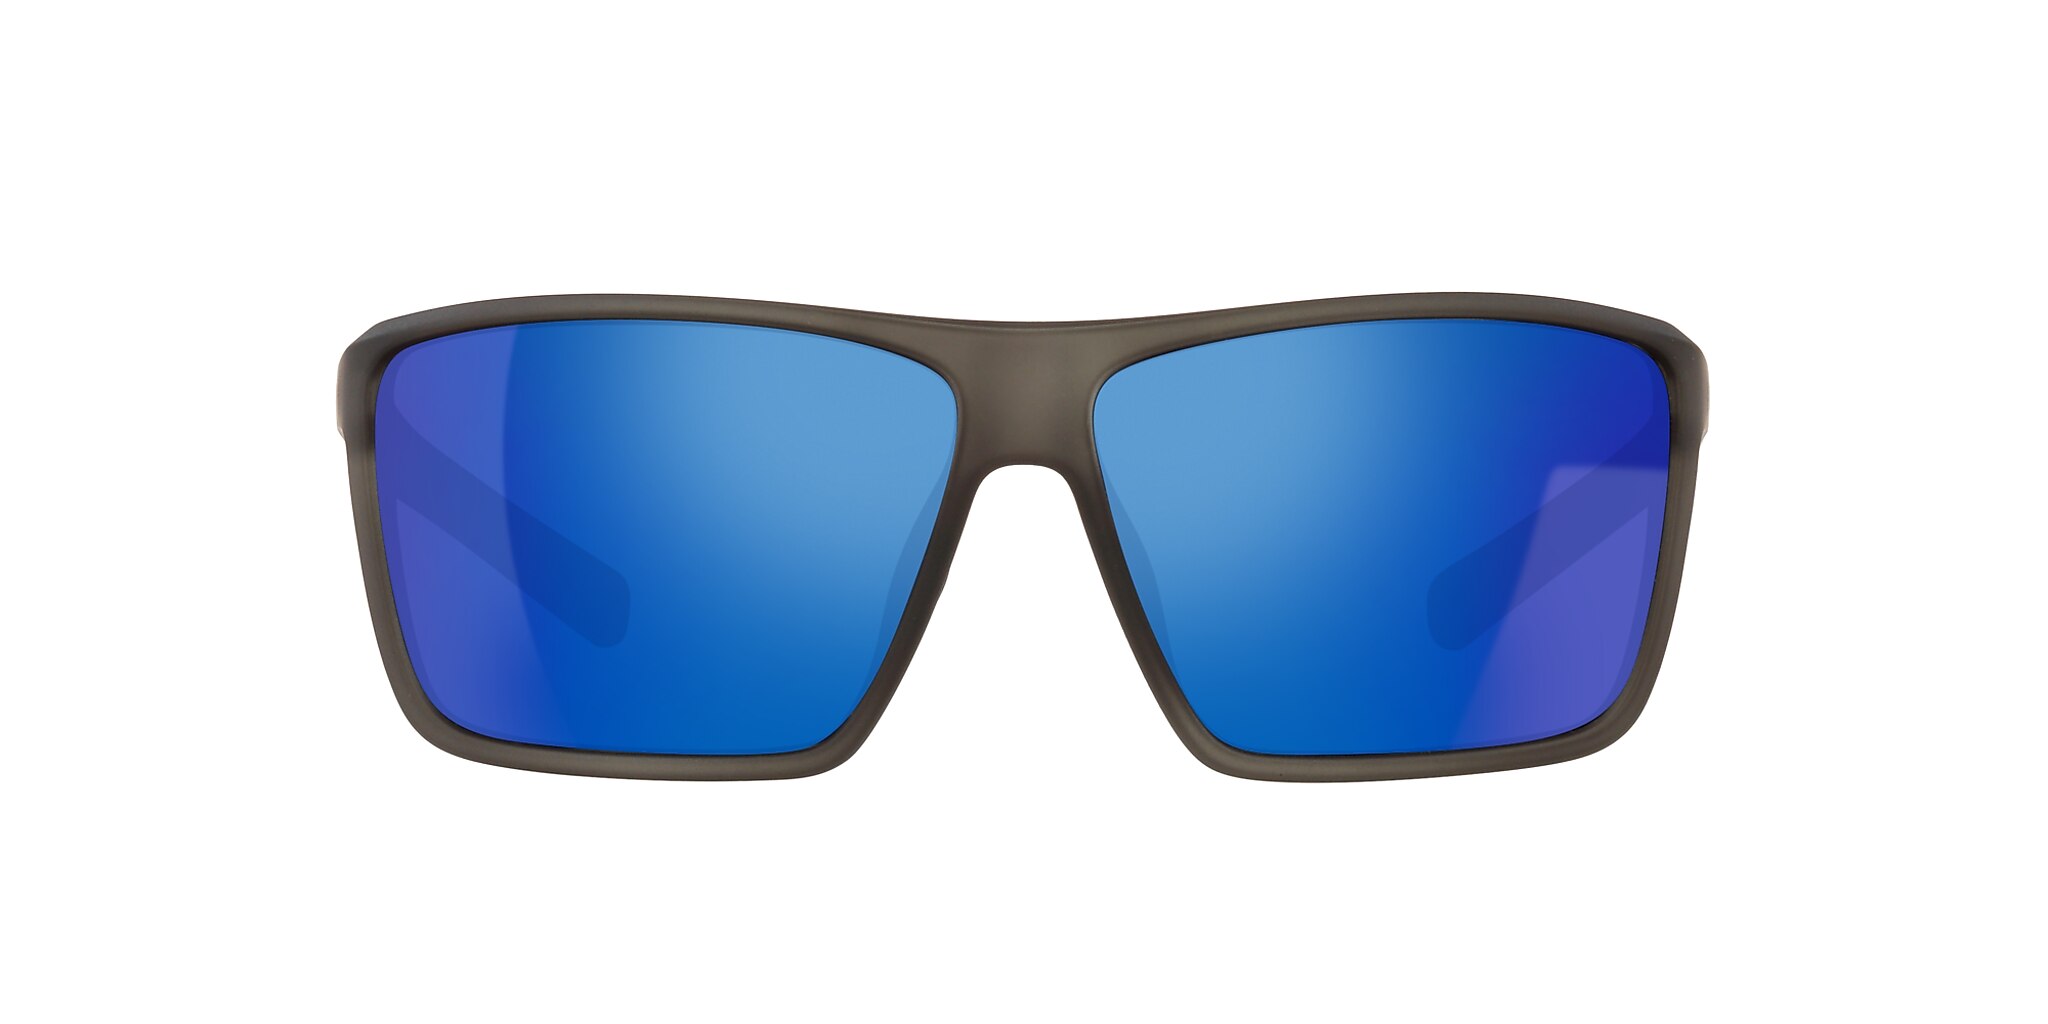 Wells XL Sunglasses in Blue Reflex | Native Eyewear®